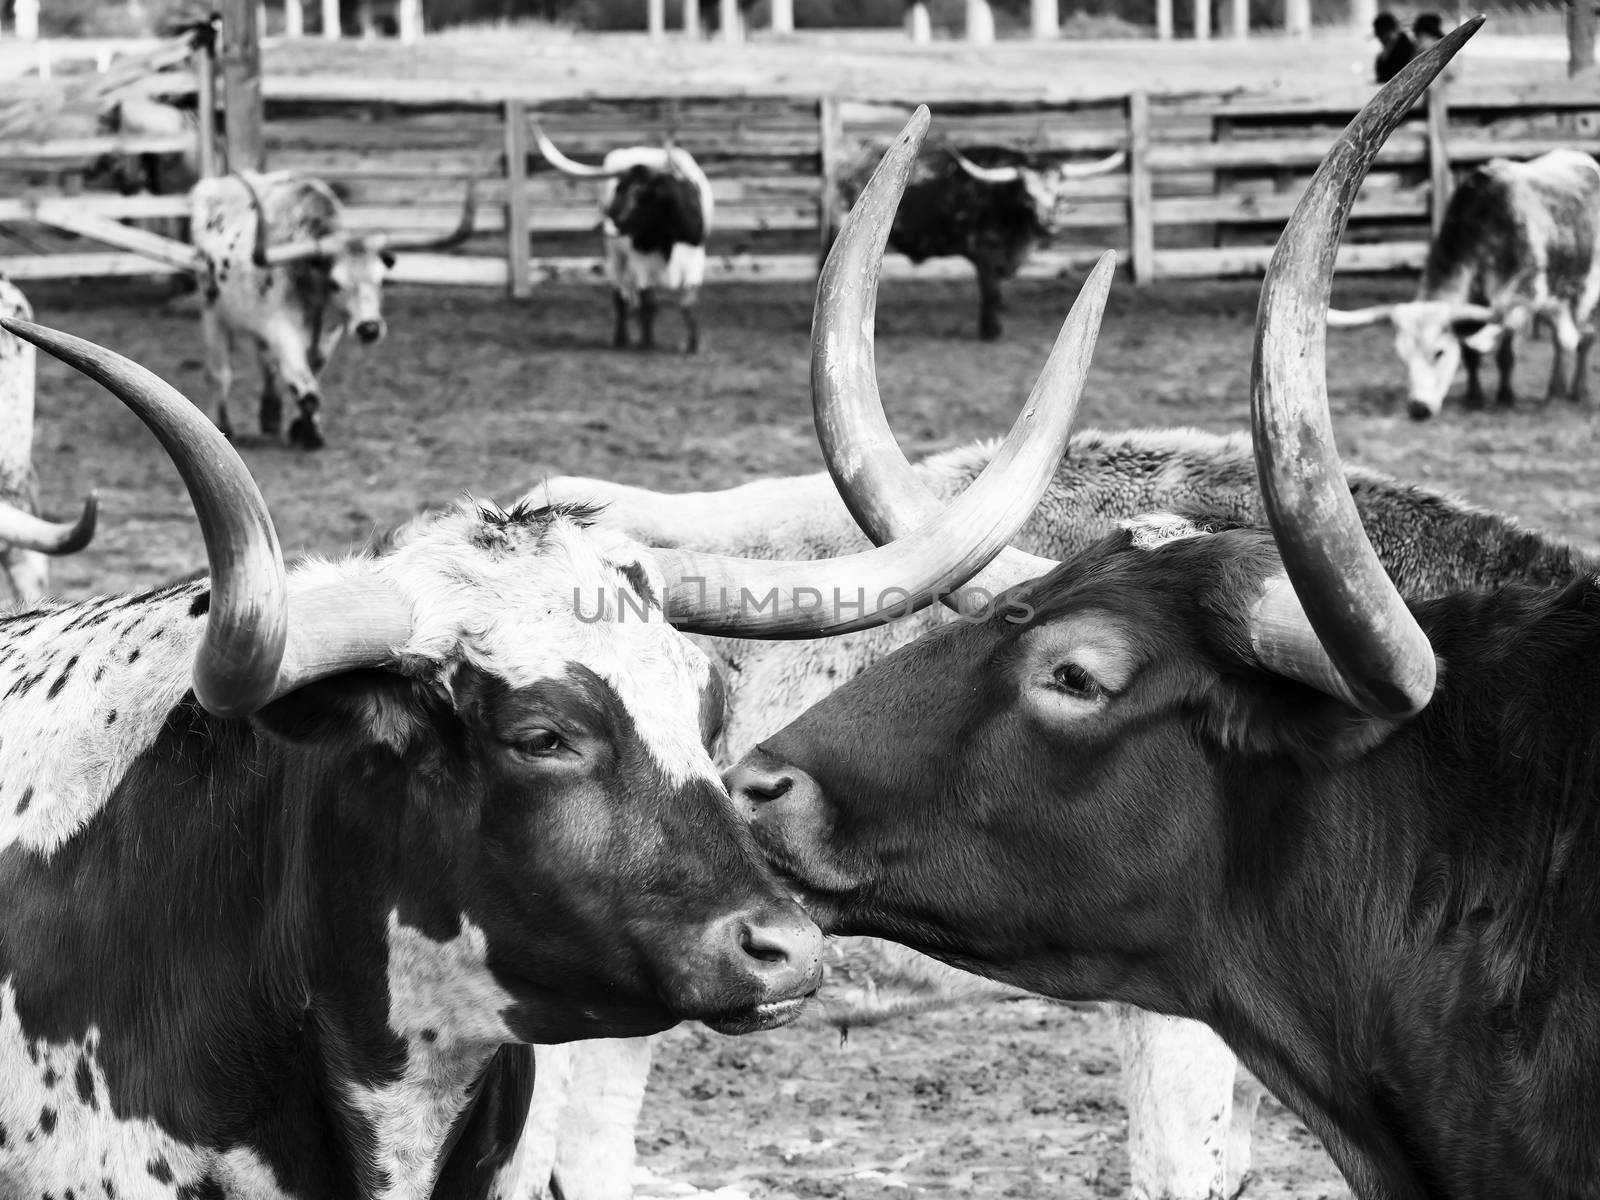 Long Horns kissing each other, Texas